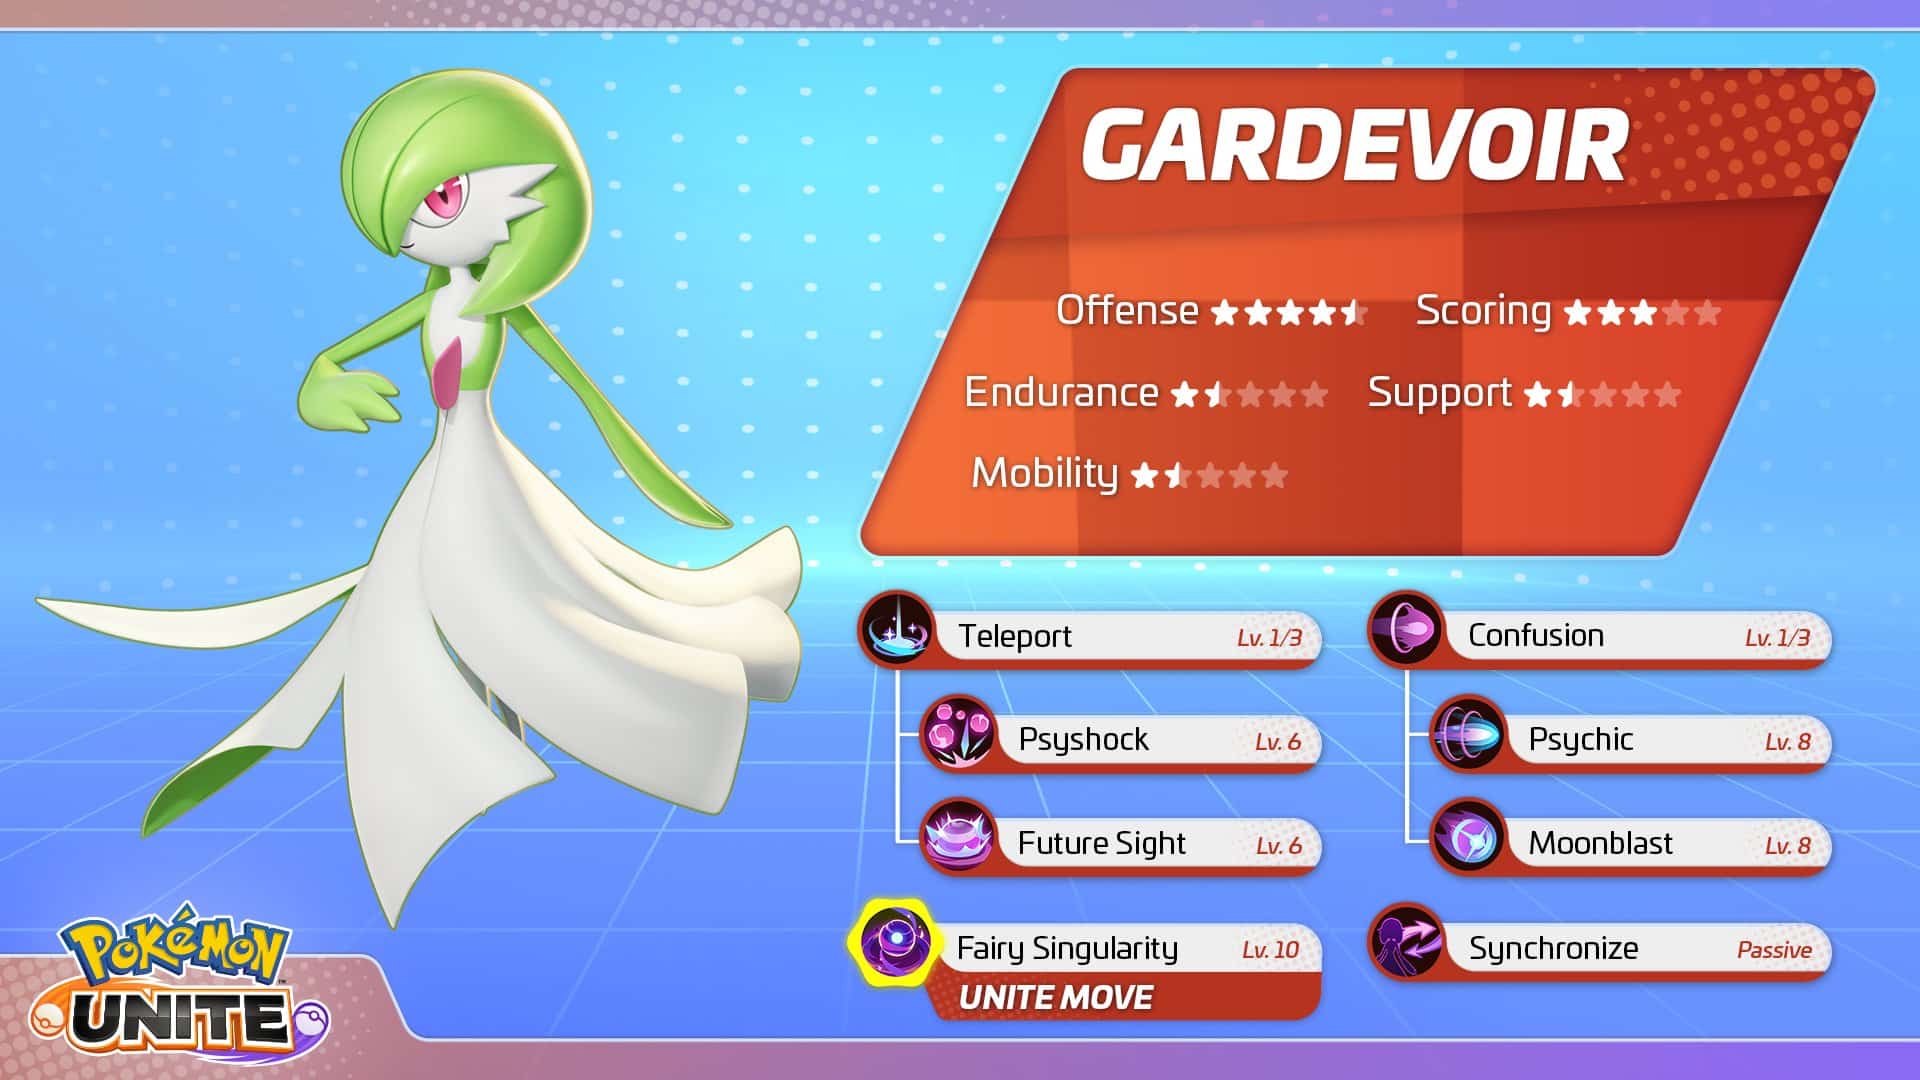 Gardevoir joins Pokemon Unite on July 28